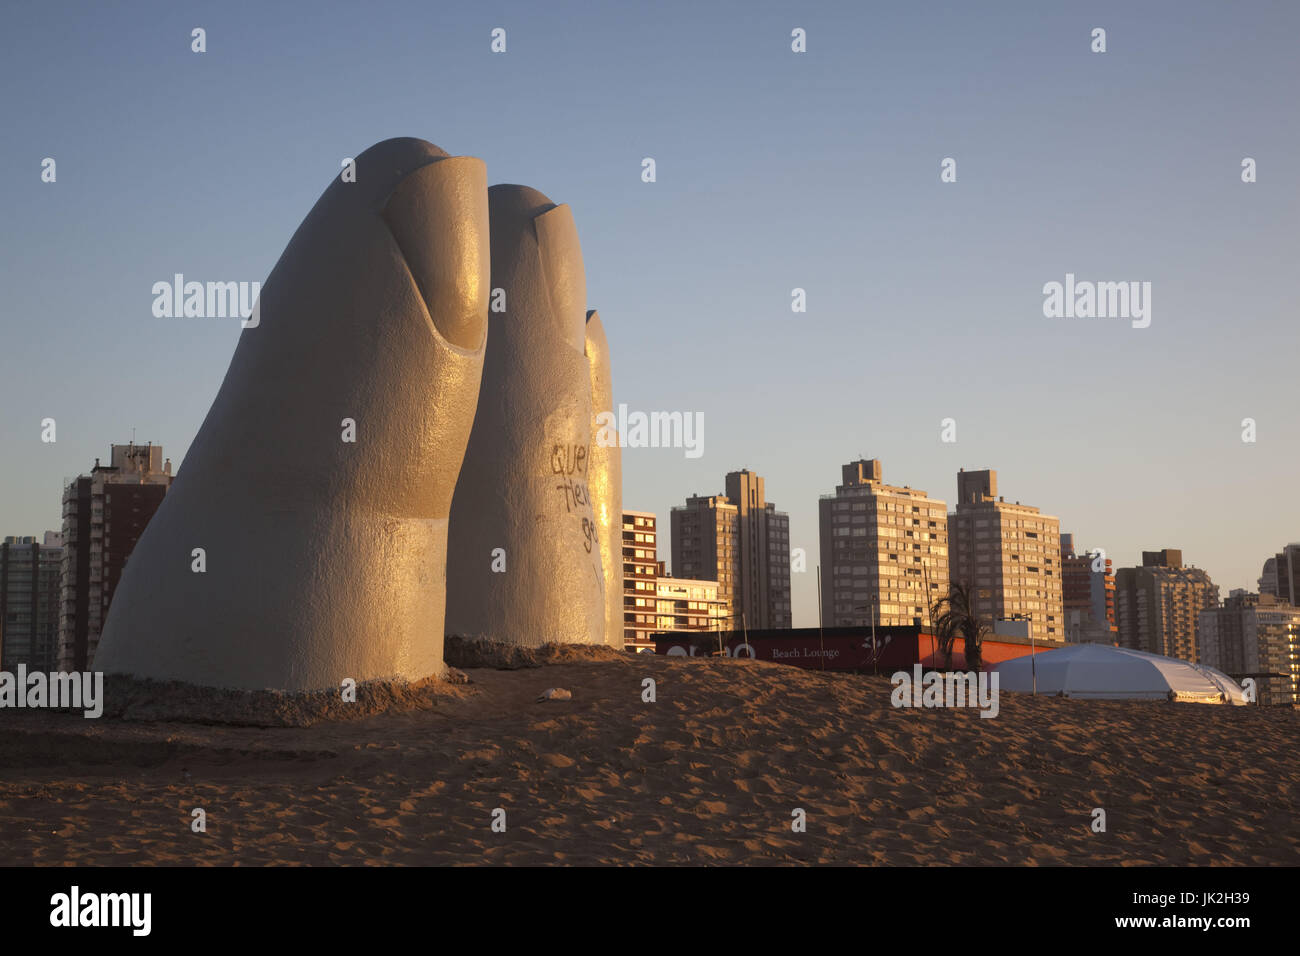 Uruguay, Punta del Este, Playa Brava beach, La Mano en la Arena, Hand in the Sand sculpture, by Chilean artist Mario Irarrazabal, sunrise Stock Photo